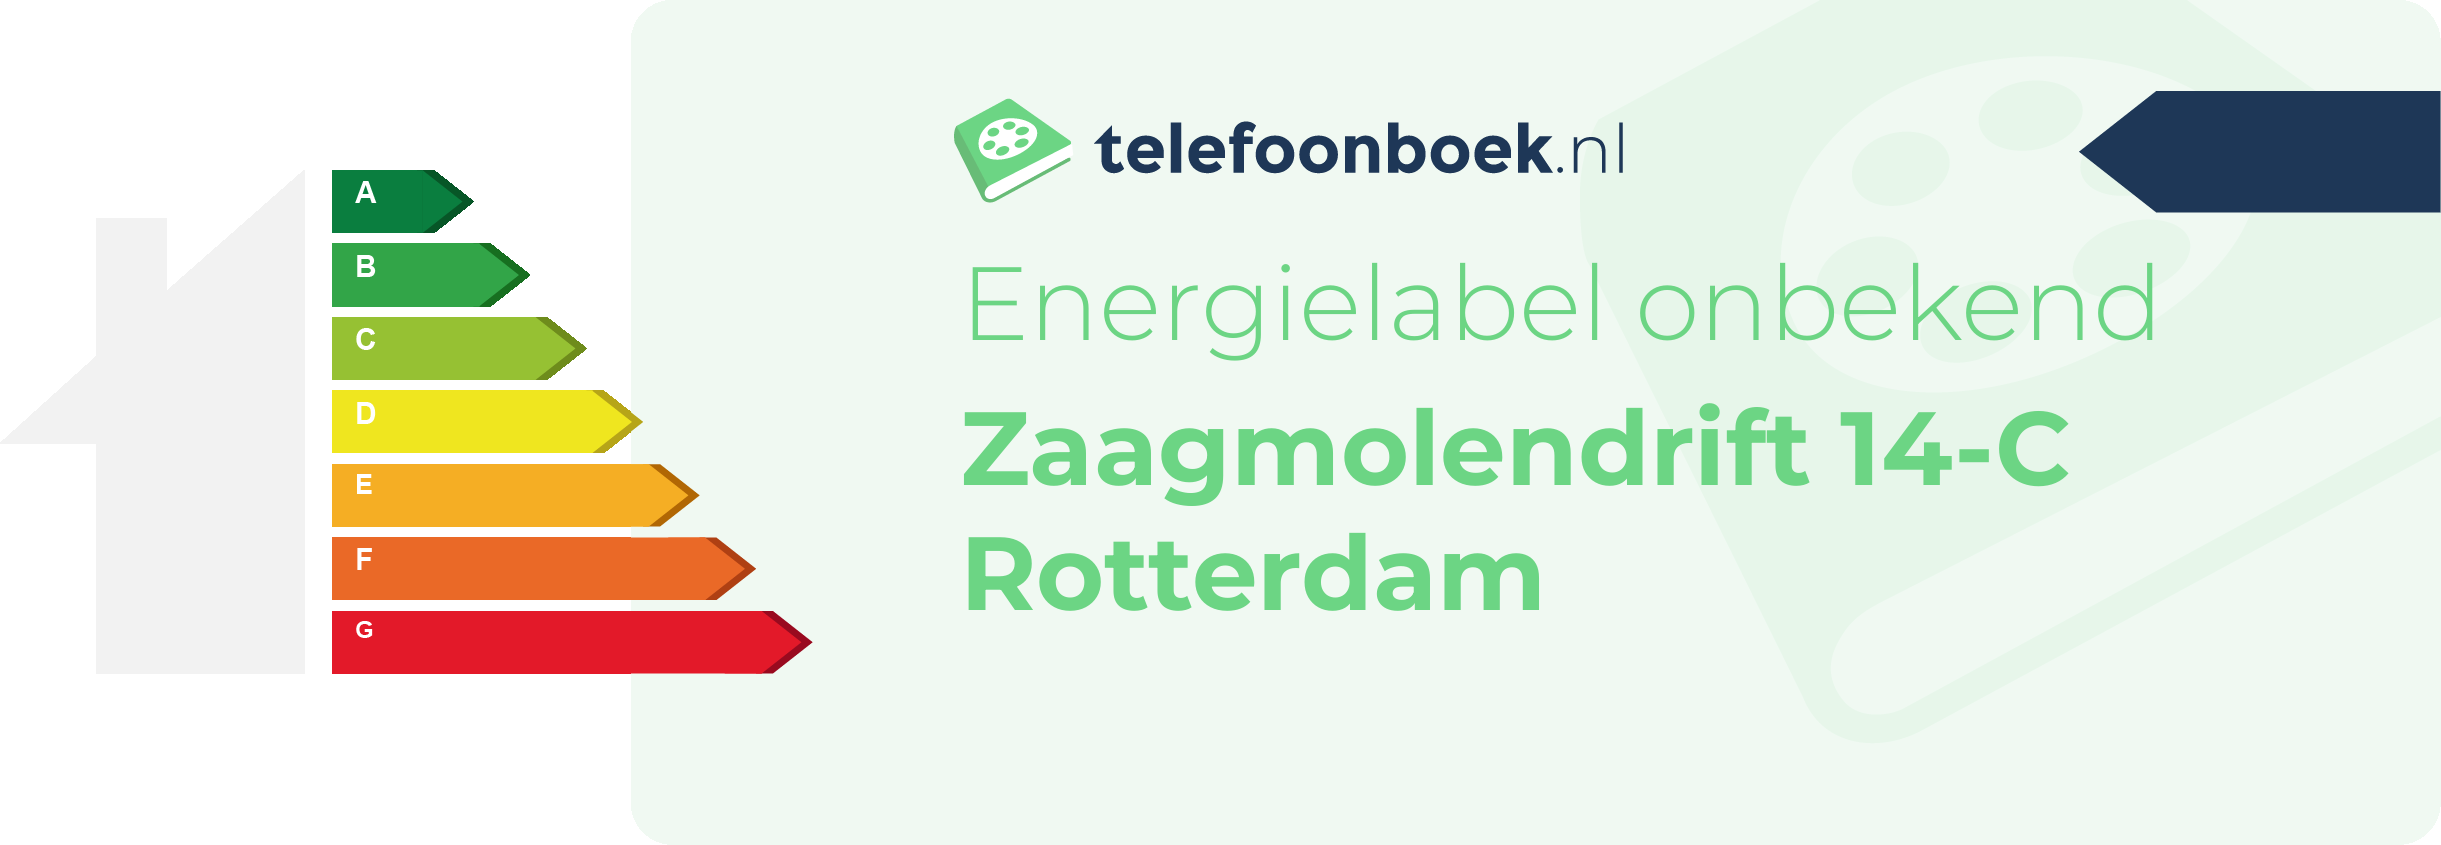 Energielabel Zaagmolendrift 14-C Rotterdam